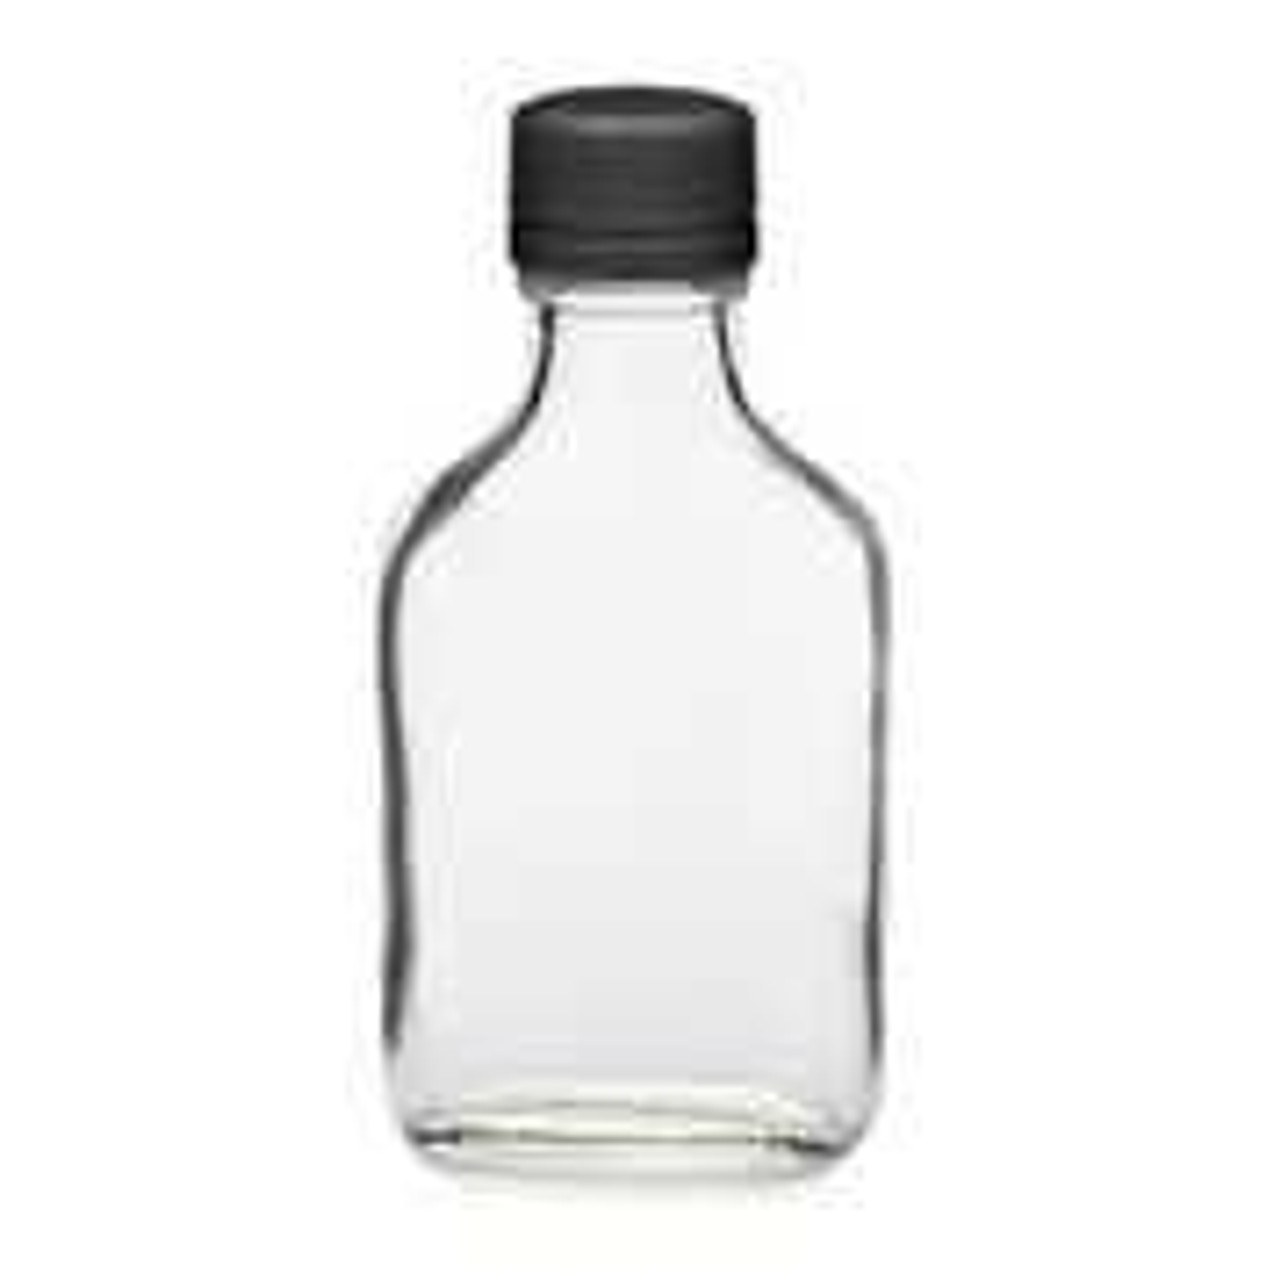 100 ml Clear Glass Flask Bottles (Bulk), Caps Not Included